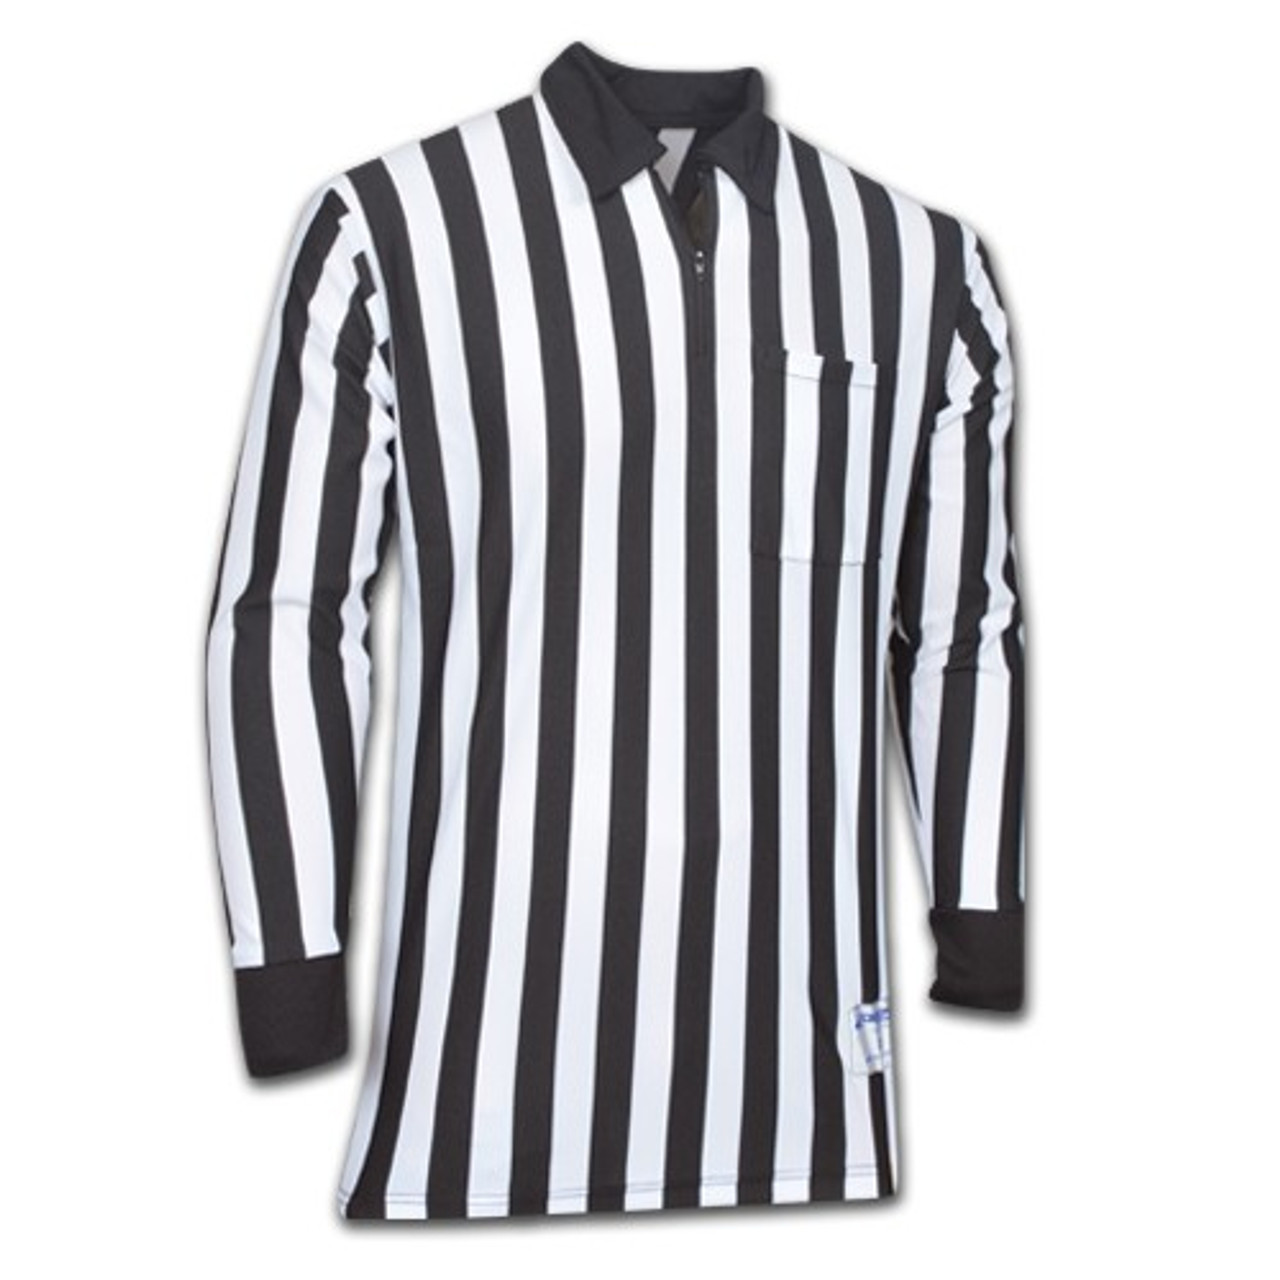 Cliff Keen Long Sleeve Football Referee Shirt Extra Tall | Referee Gear